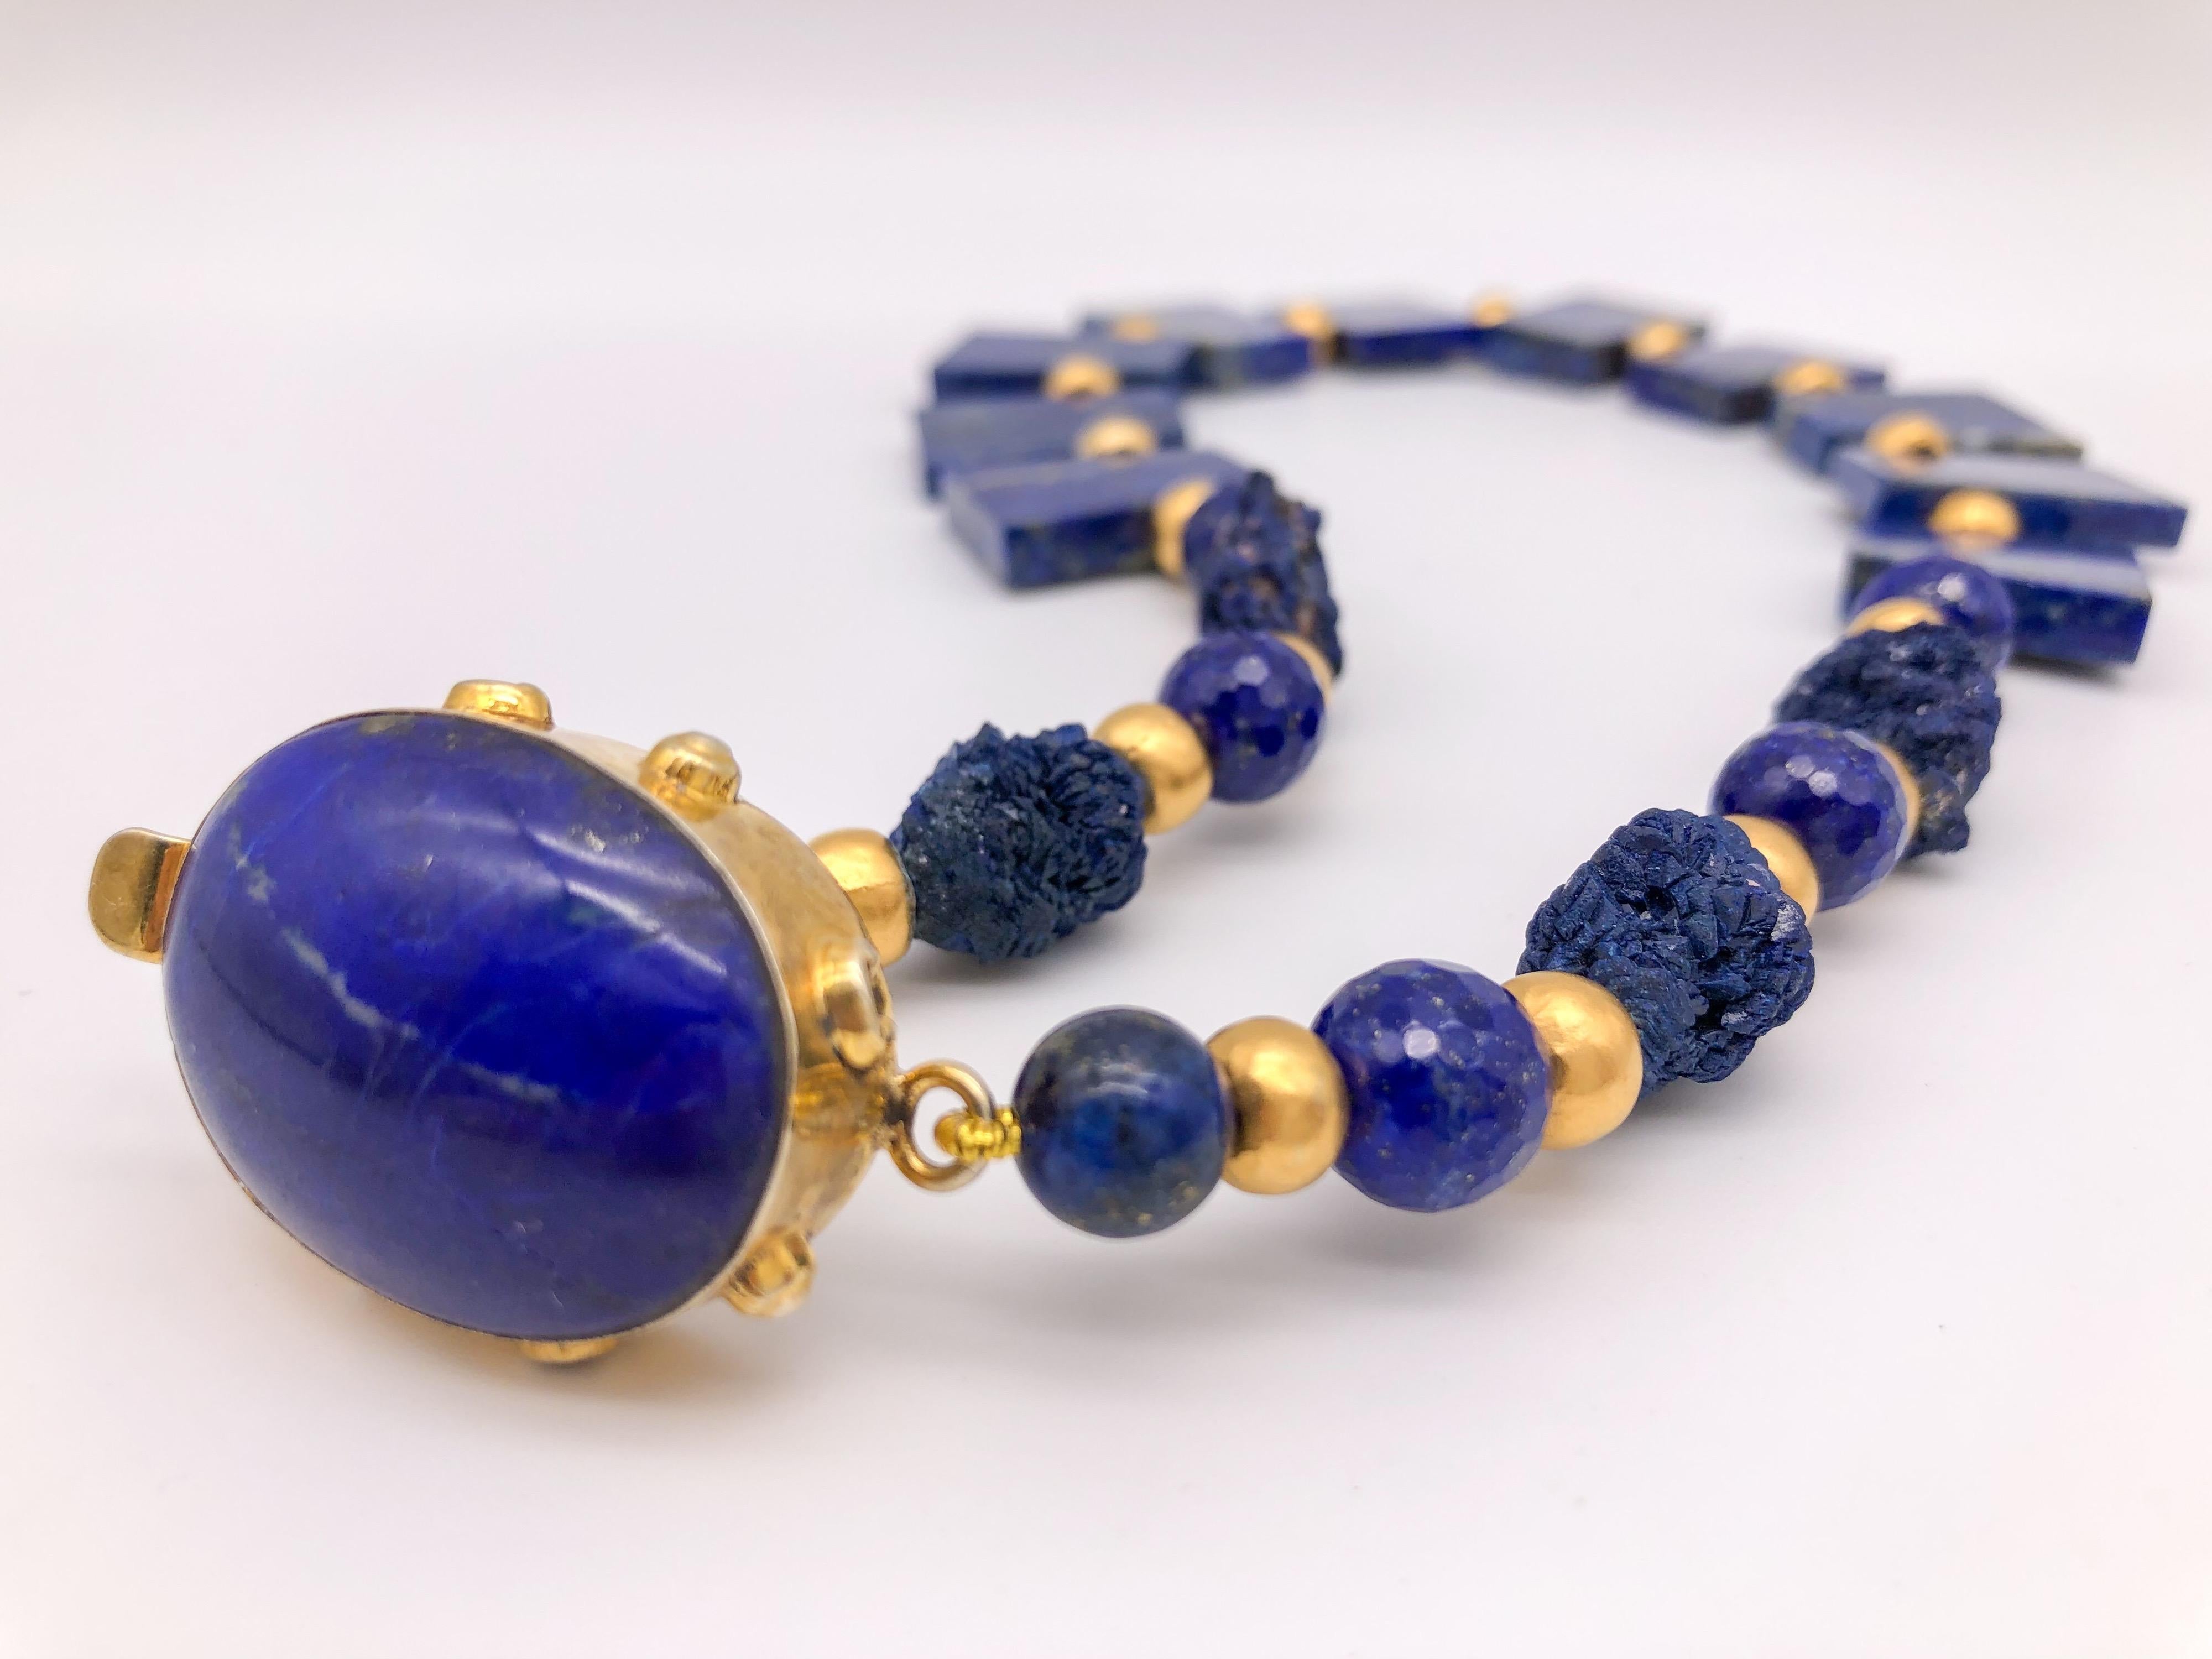 A.Jeschel Fabulous Lapis Lazuli Collar necklace For Sale 1